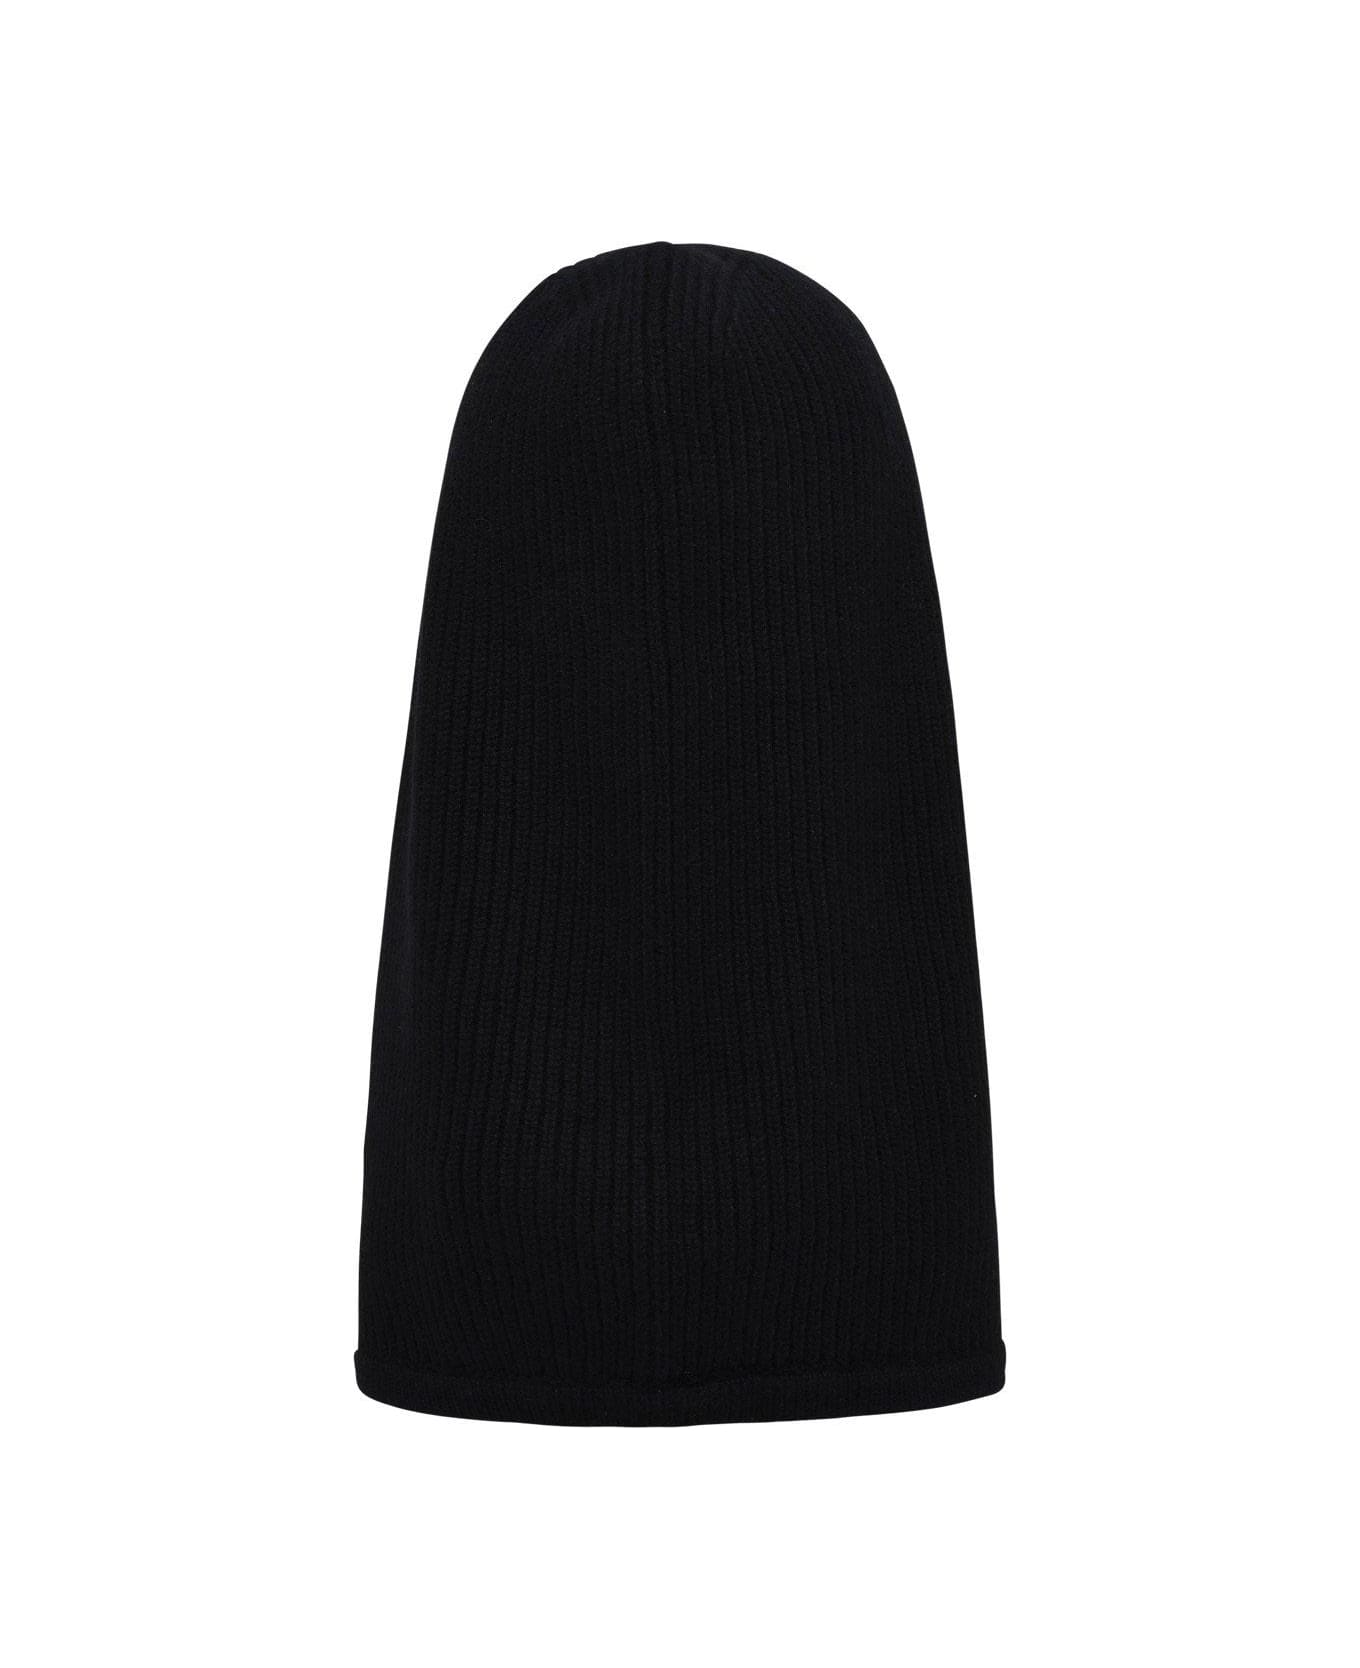 Saint Laurent Ribbed Balaclava - BLACK 帽子